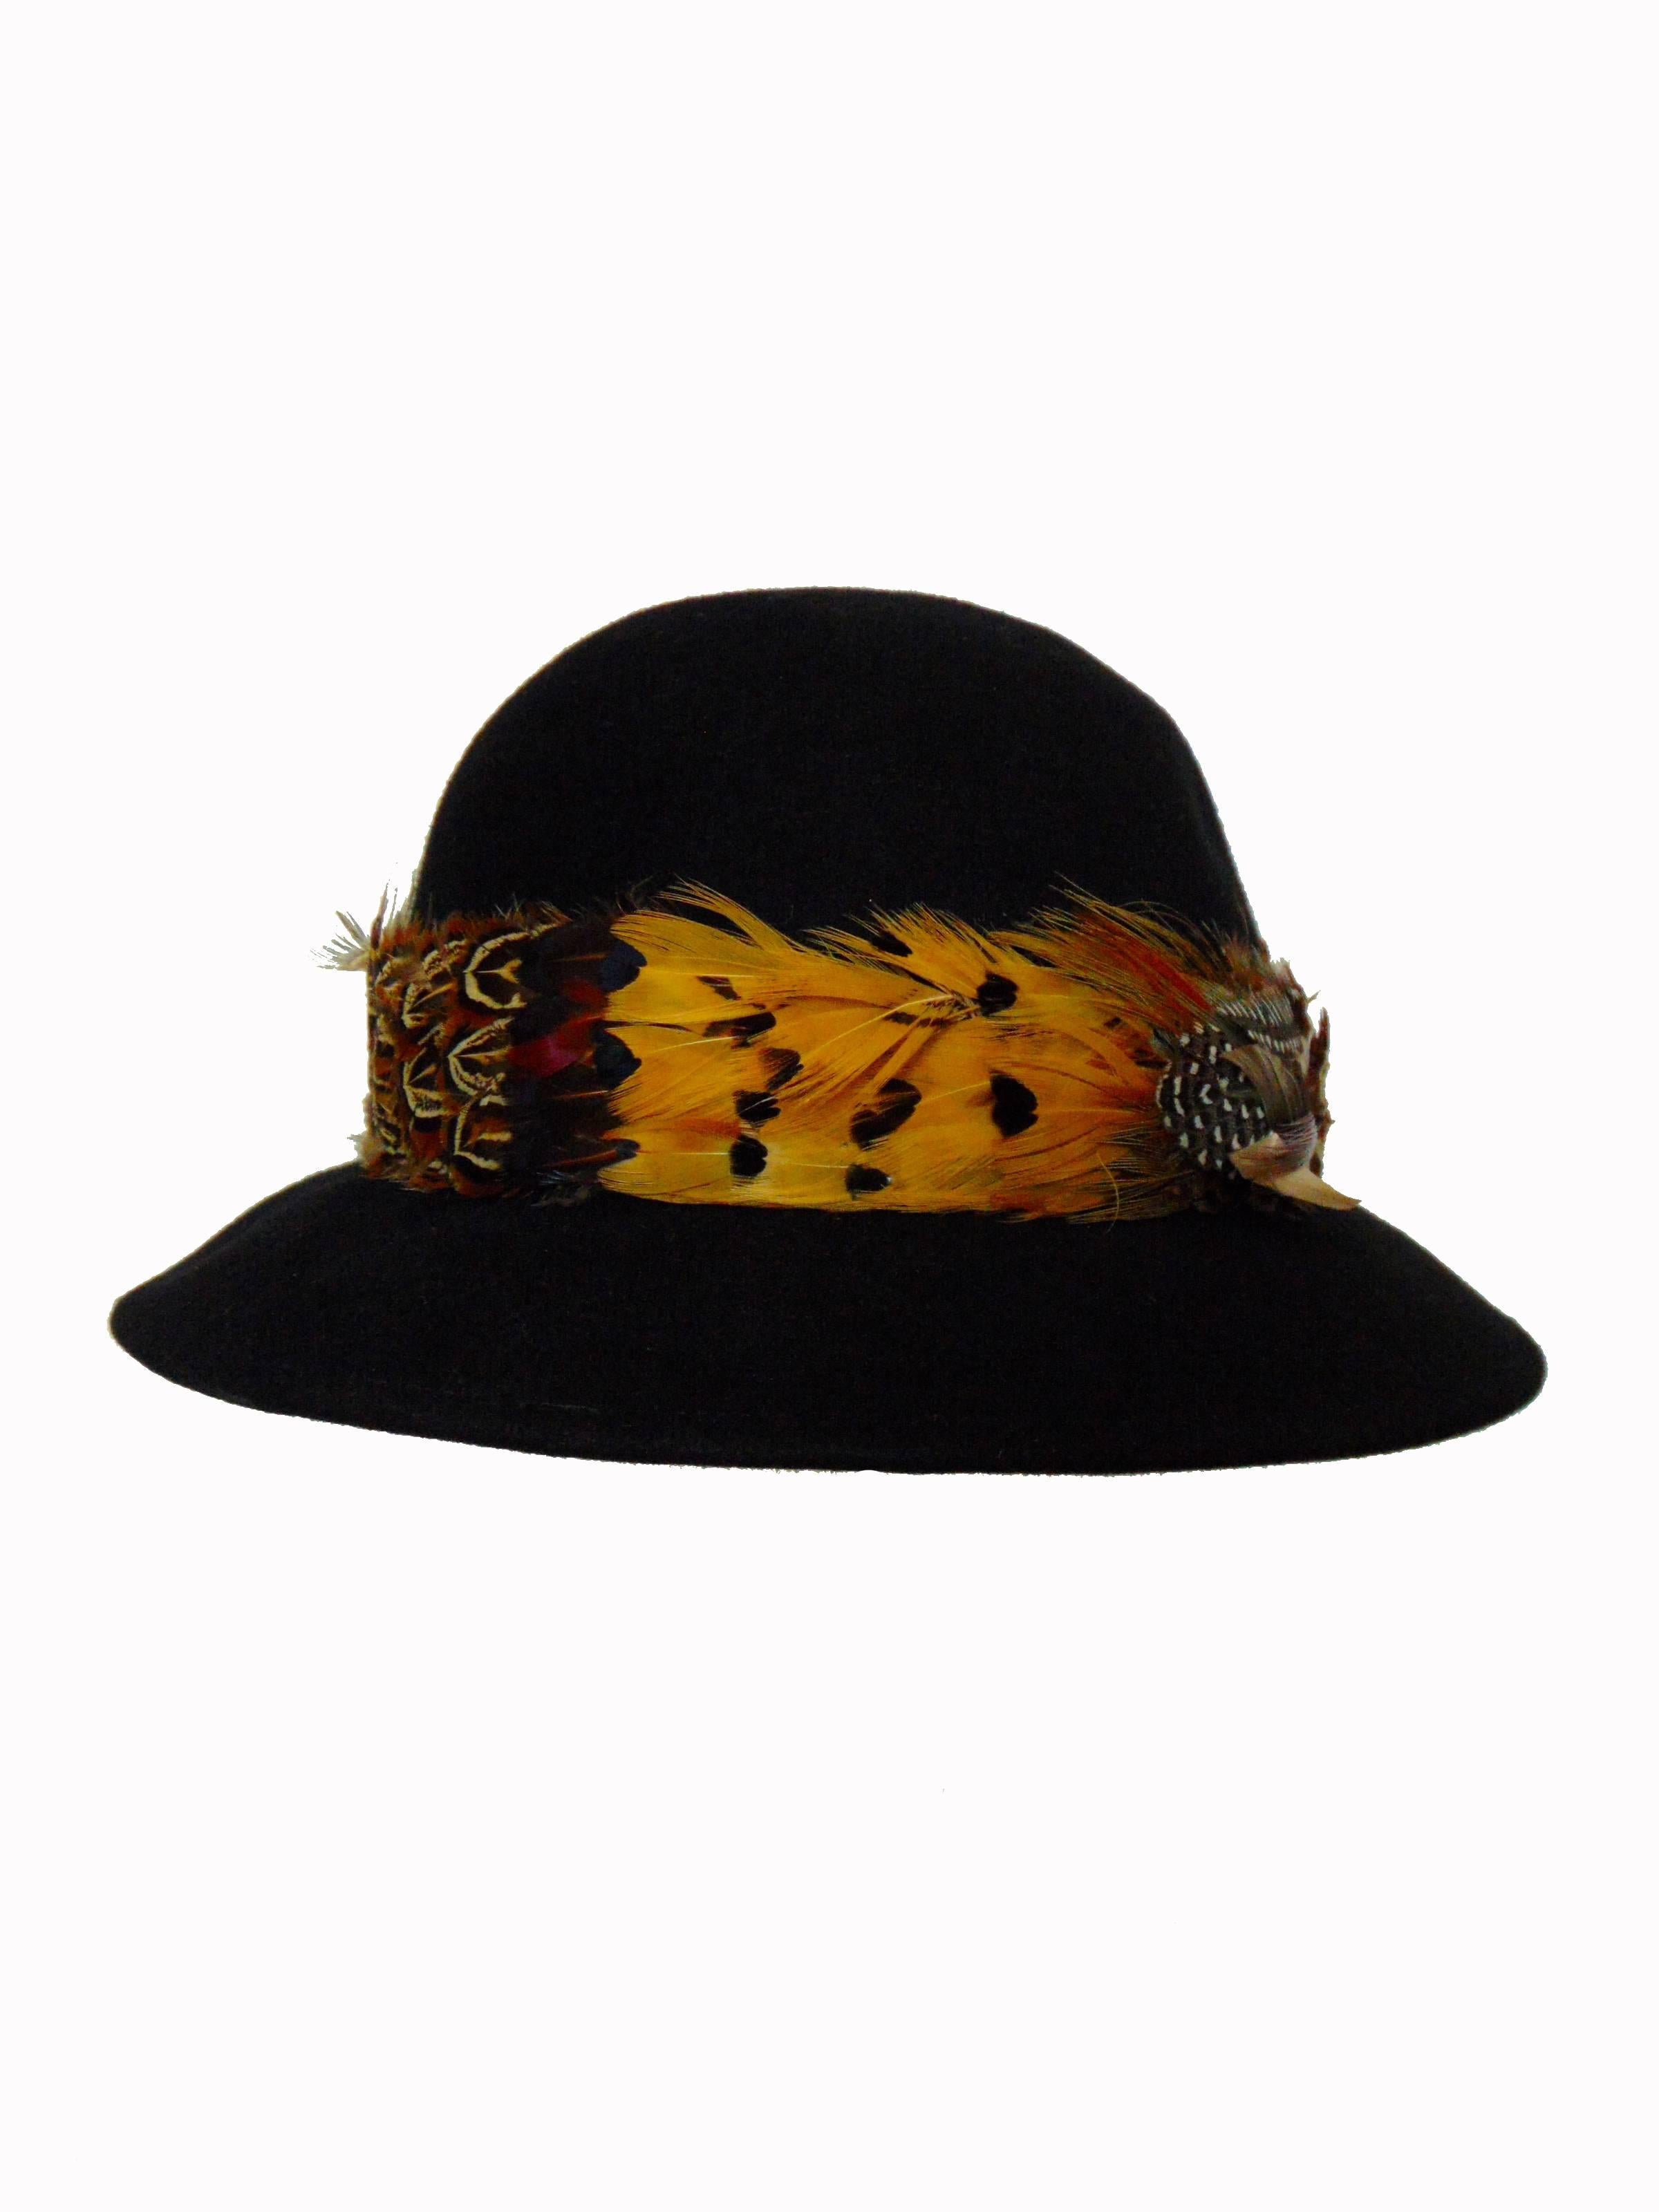 vintage halston hat